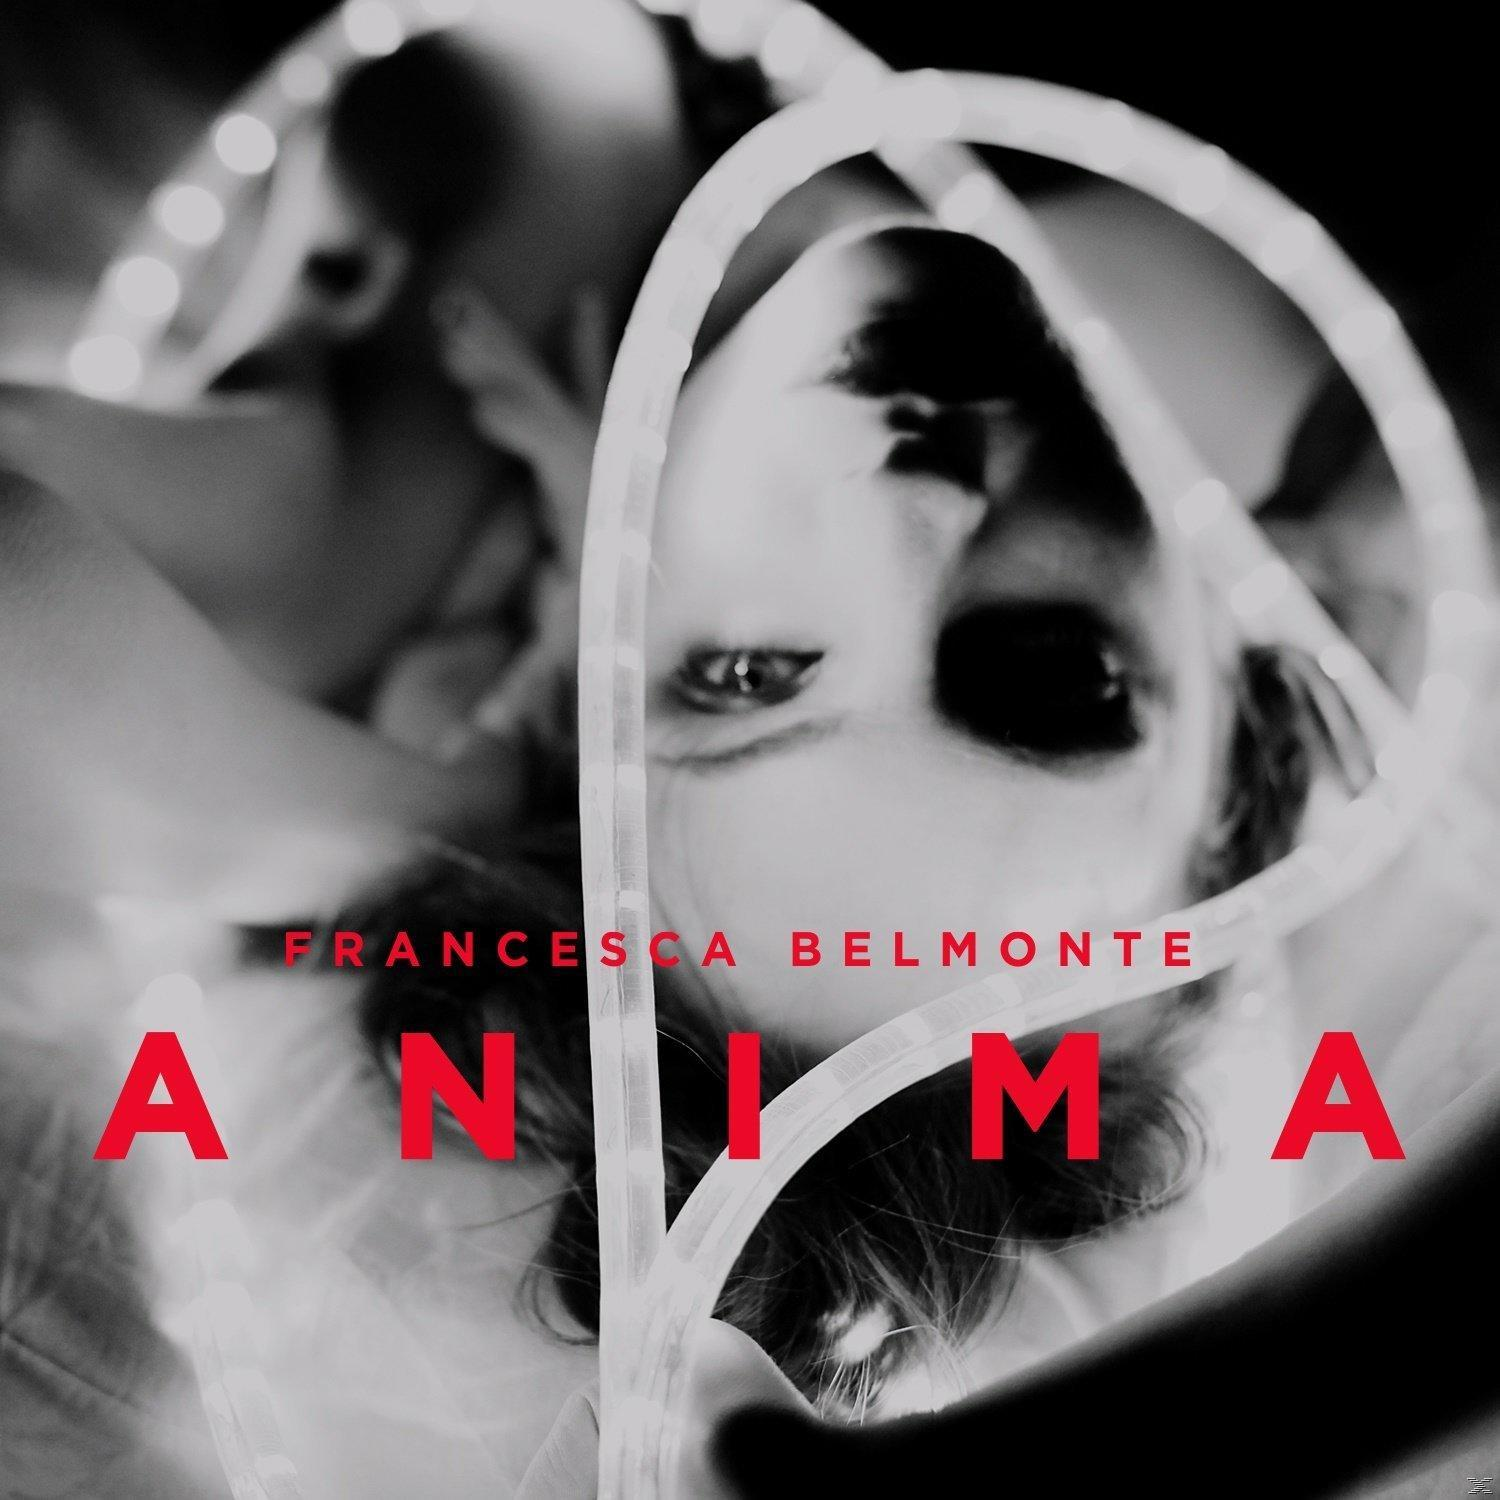 Francesca Belmonte - Bonus-CD) Anima + - (LP